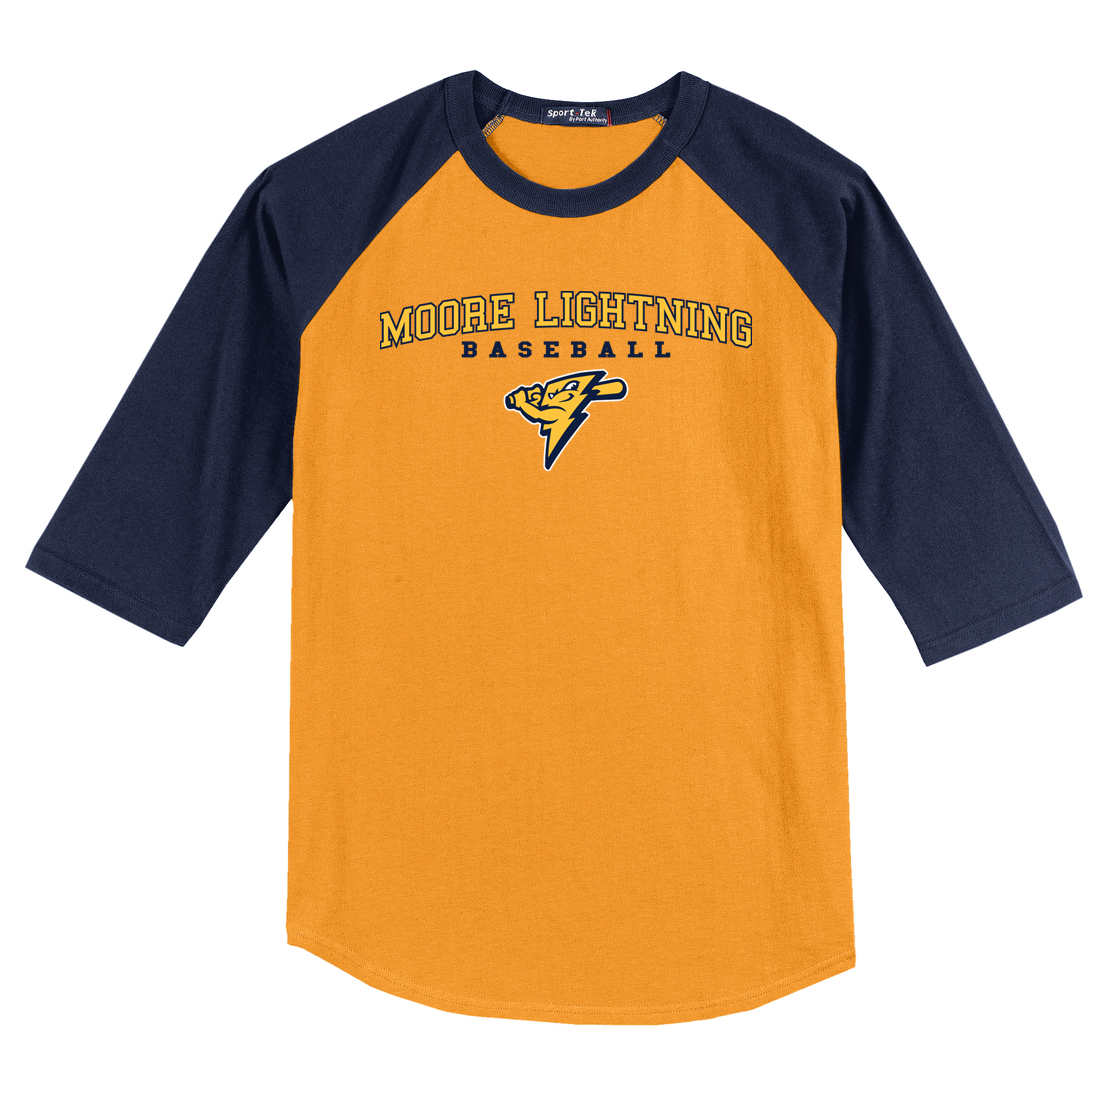 Moore Lightning Baseball  3/4 Sleeve Baseball Shirt